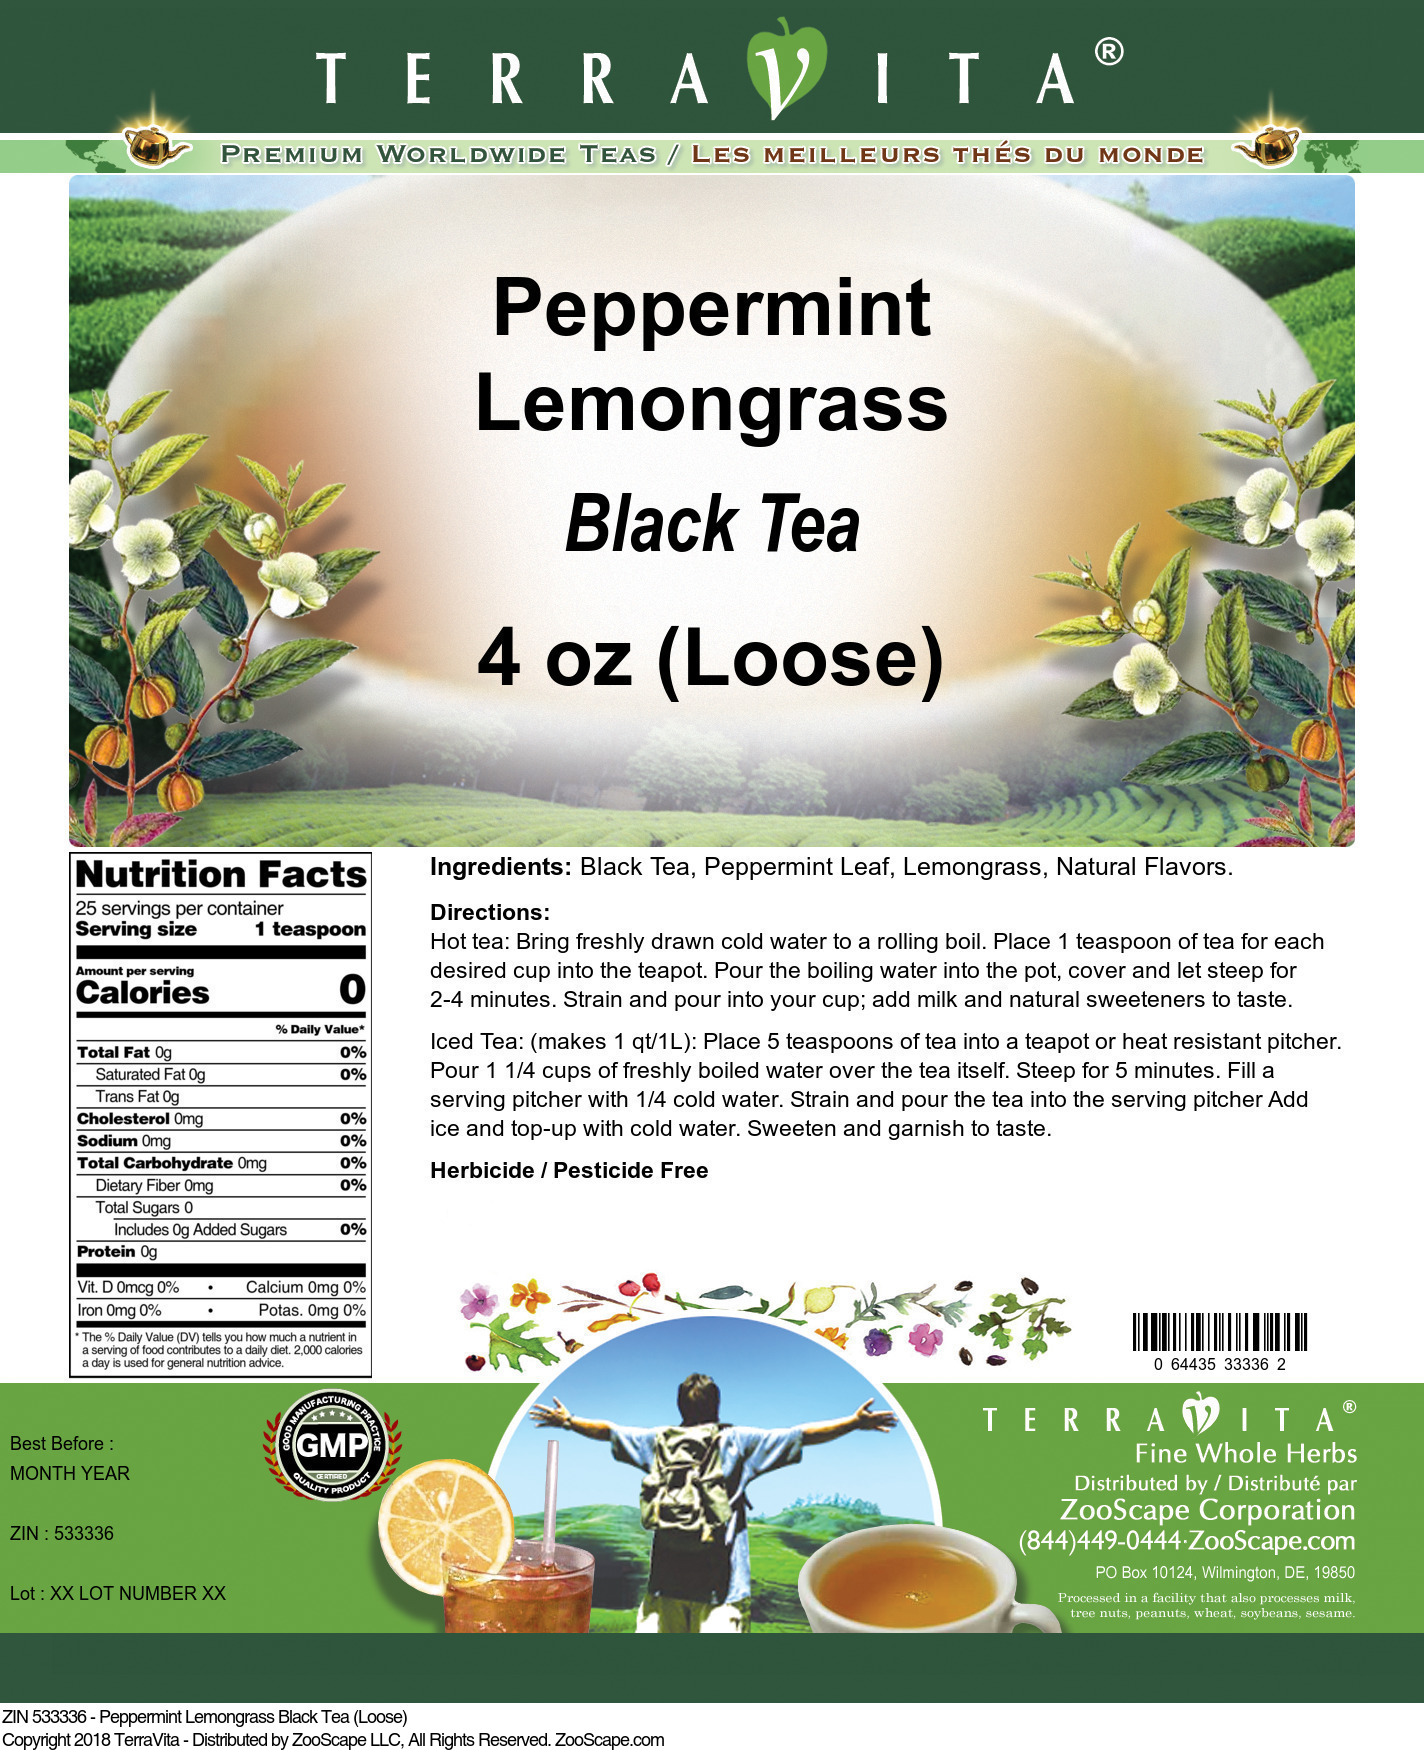 Peppermint Lemongrass Black Tea (Loose) - Label